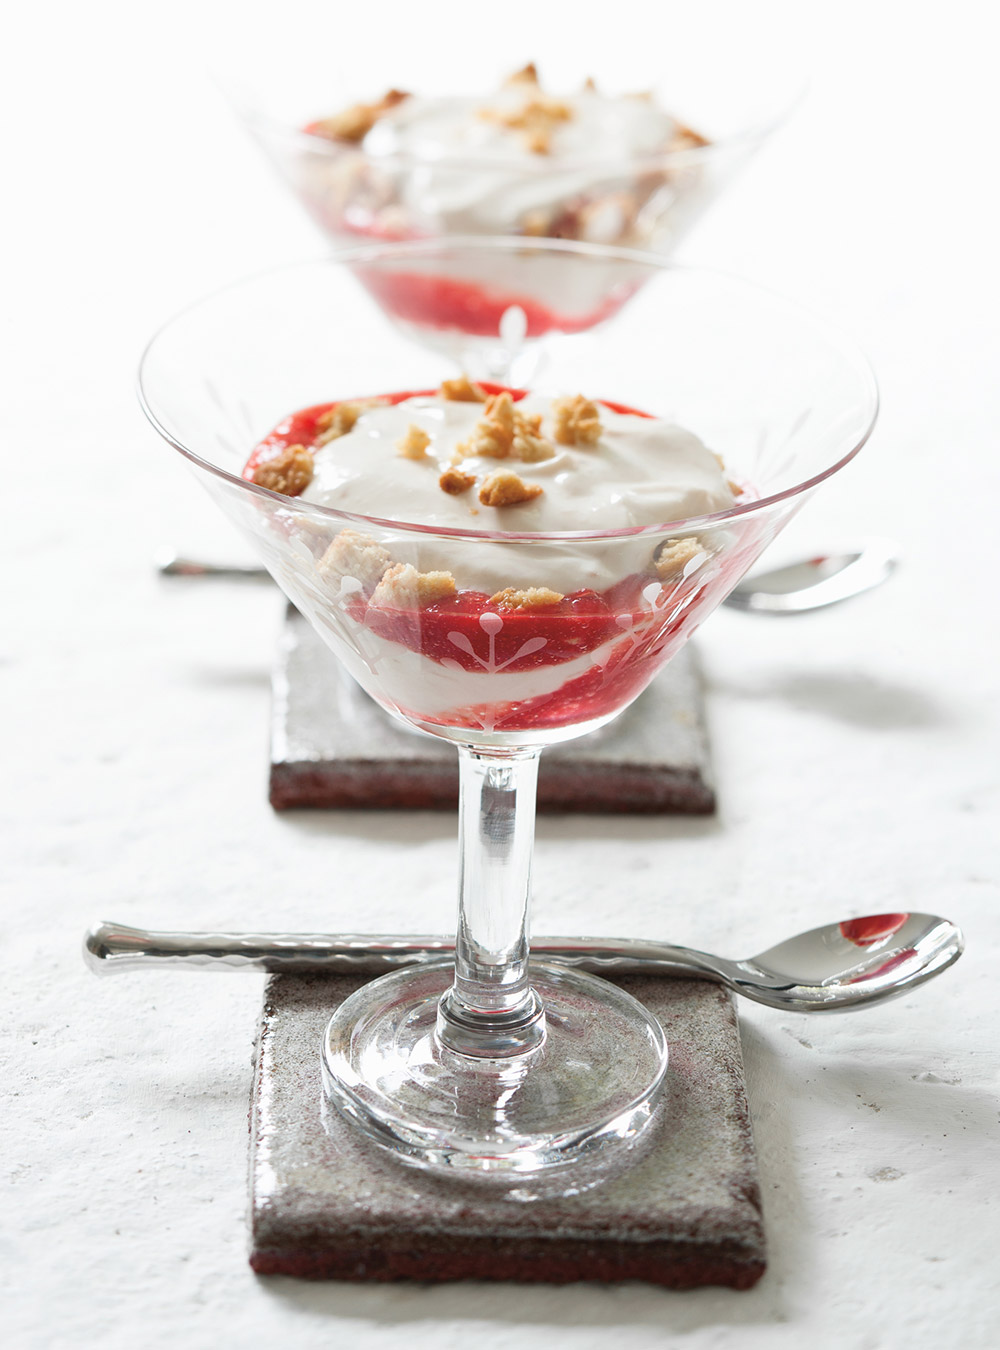 Quick Yogurt and Strawberry Trifle